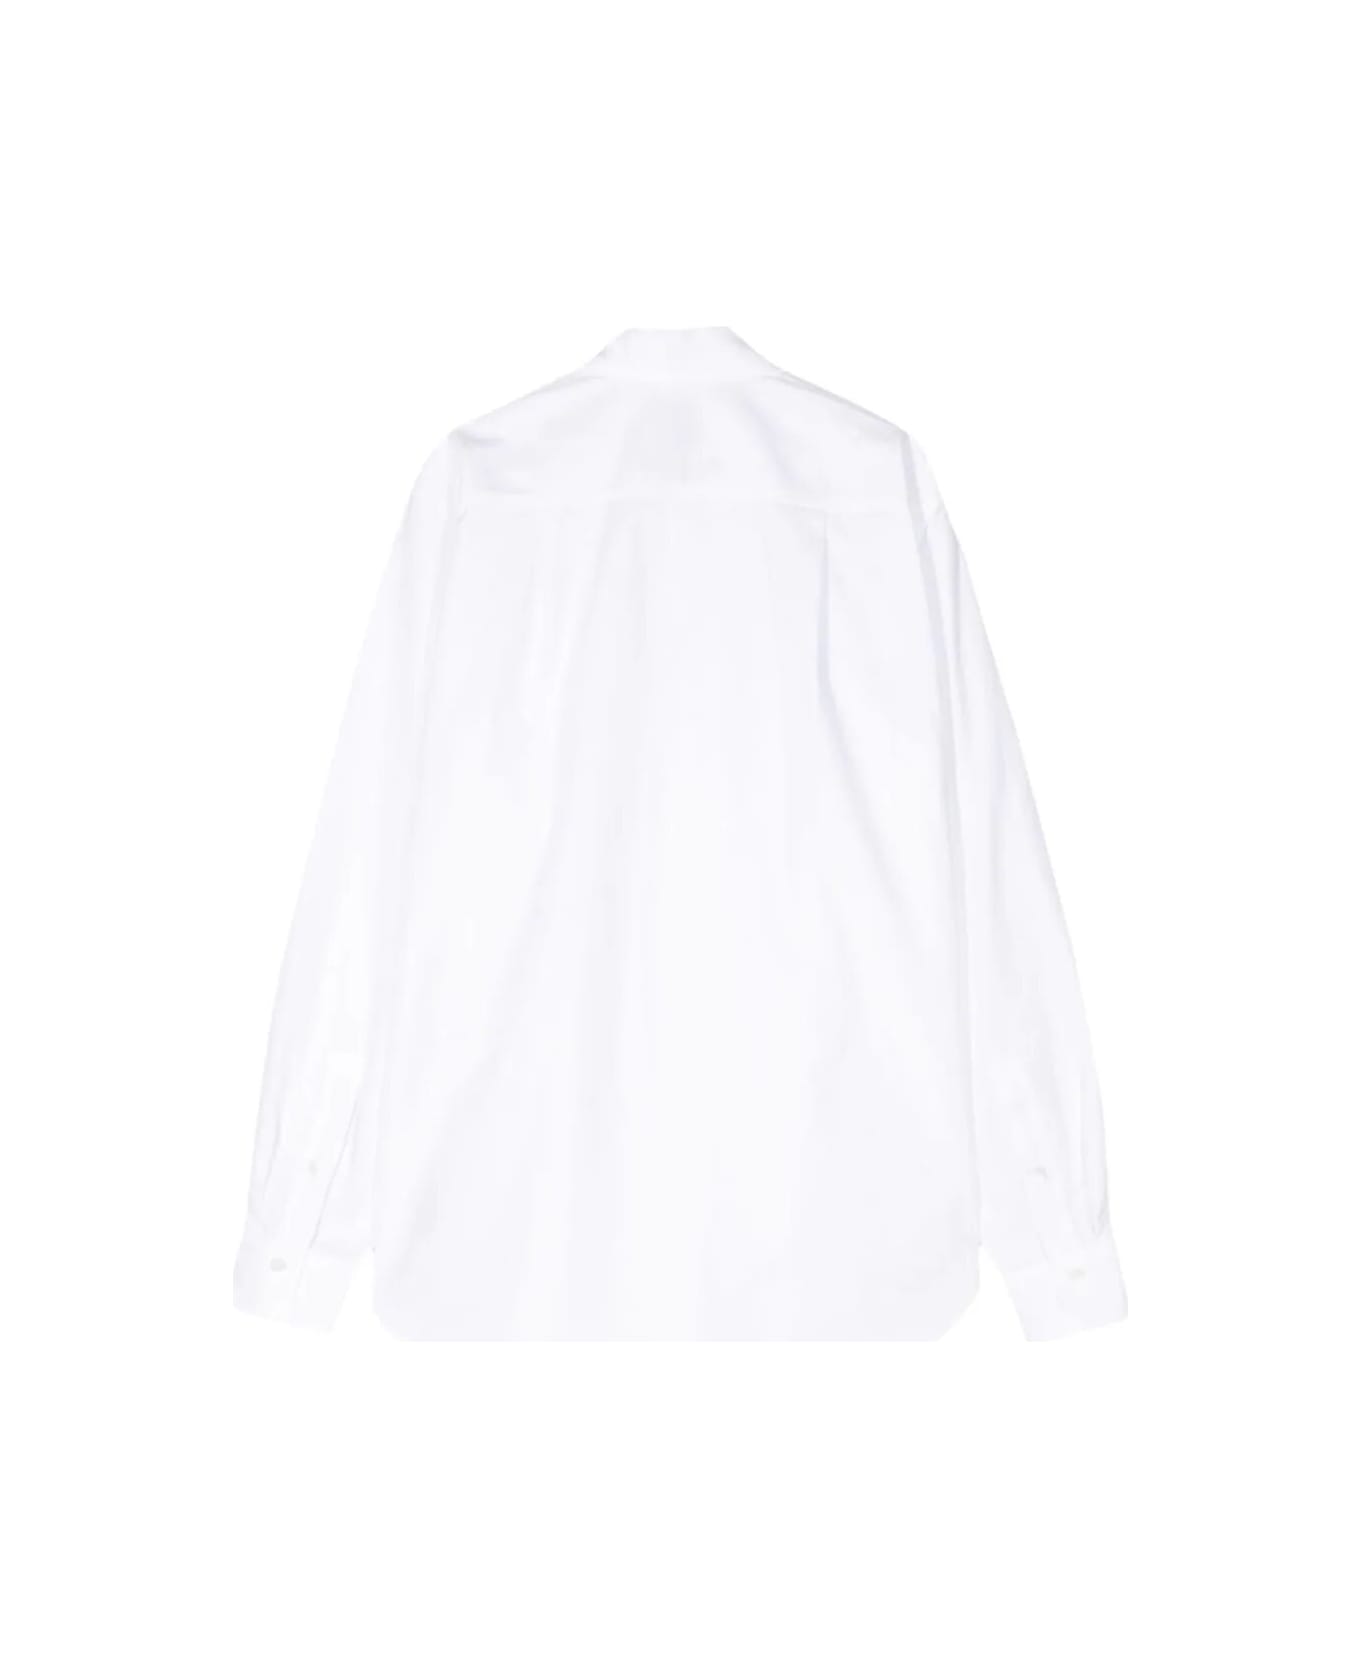 Paul Smith Classic Shirt - White